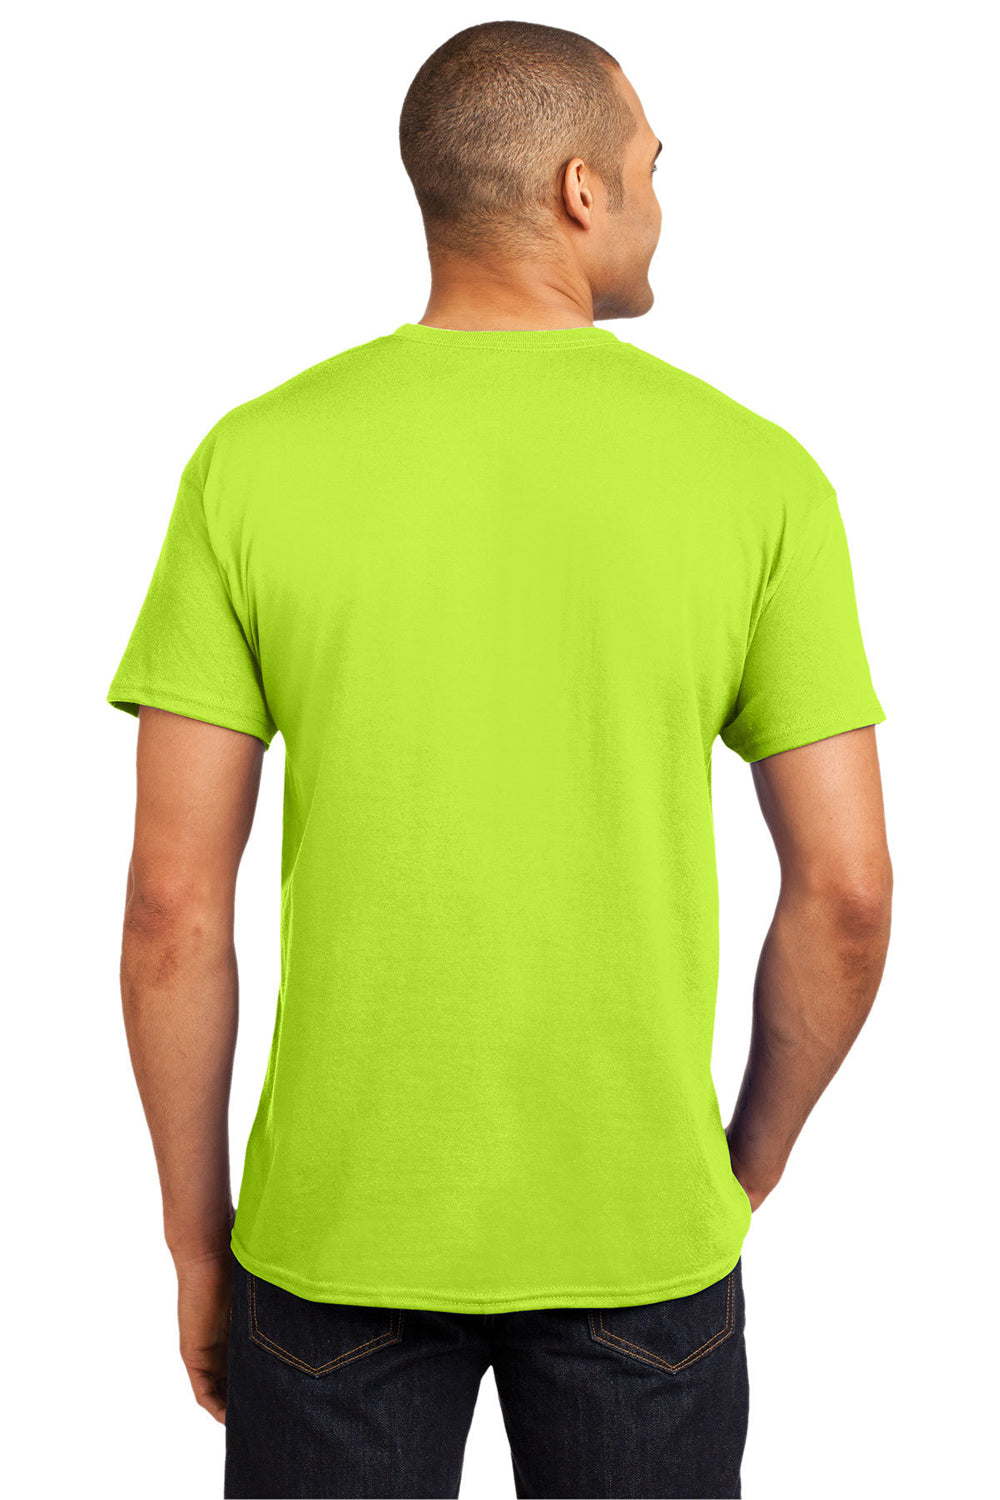 Hanes 5170 Mens EcoSmart Short Sleeve Crewneck T-Shirt Safety Green Back